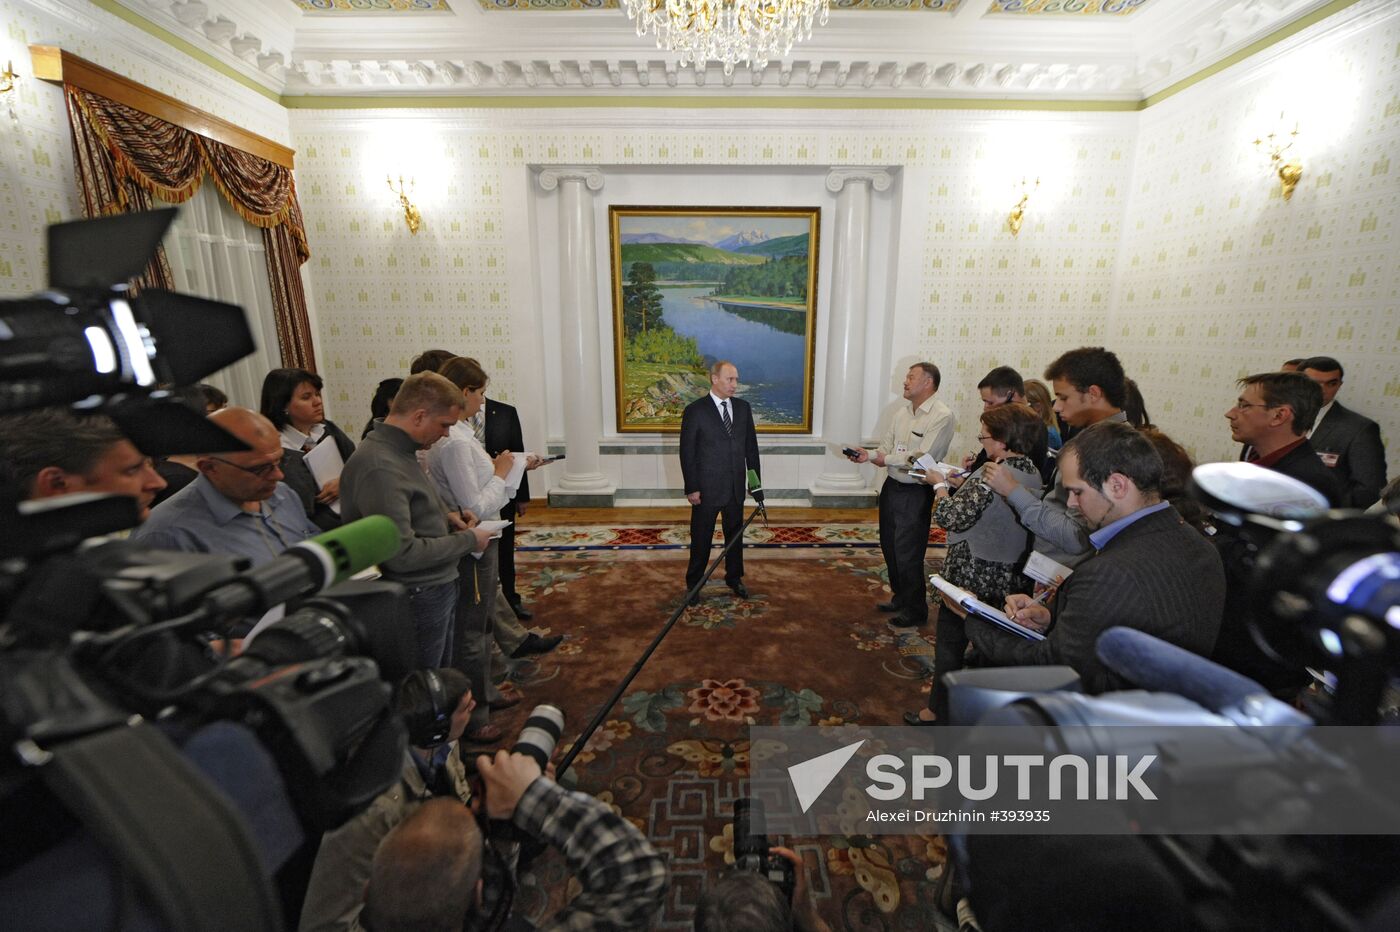 Vladimir Putin's news conference in Mongolia